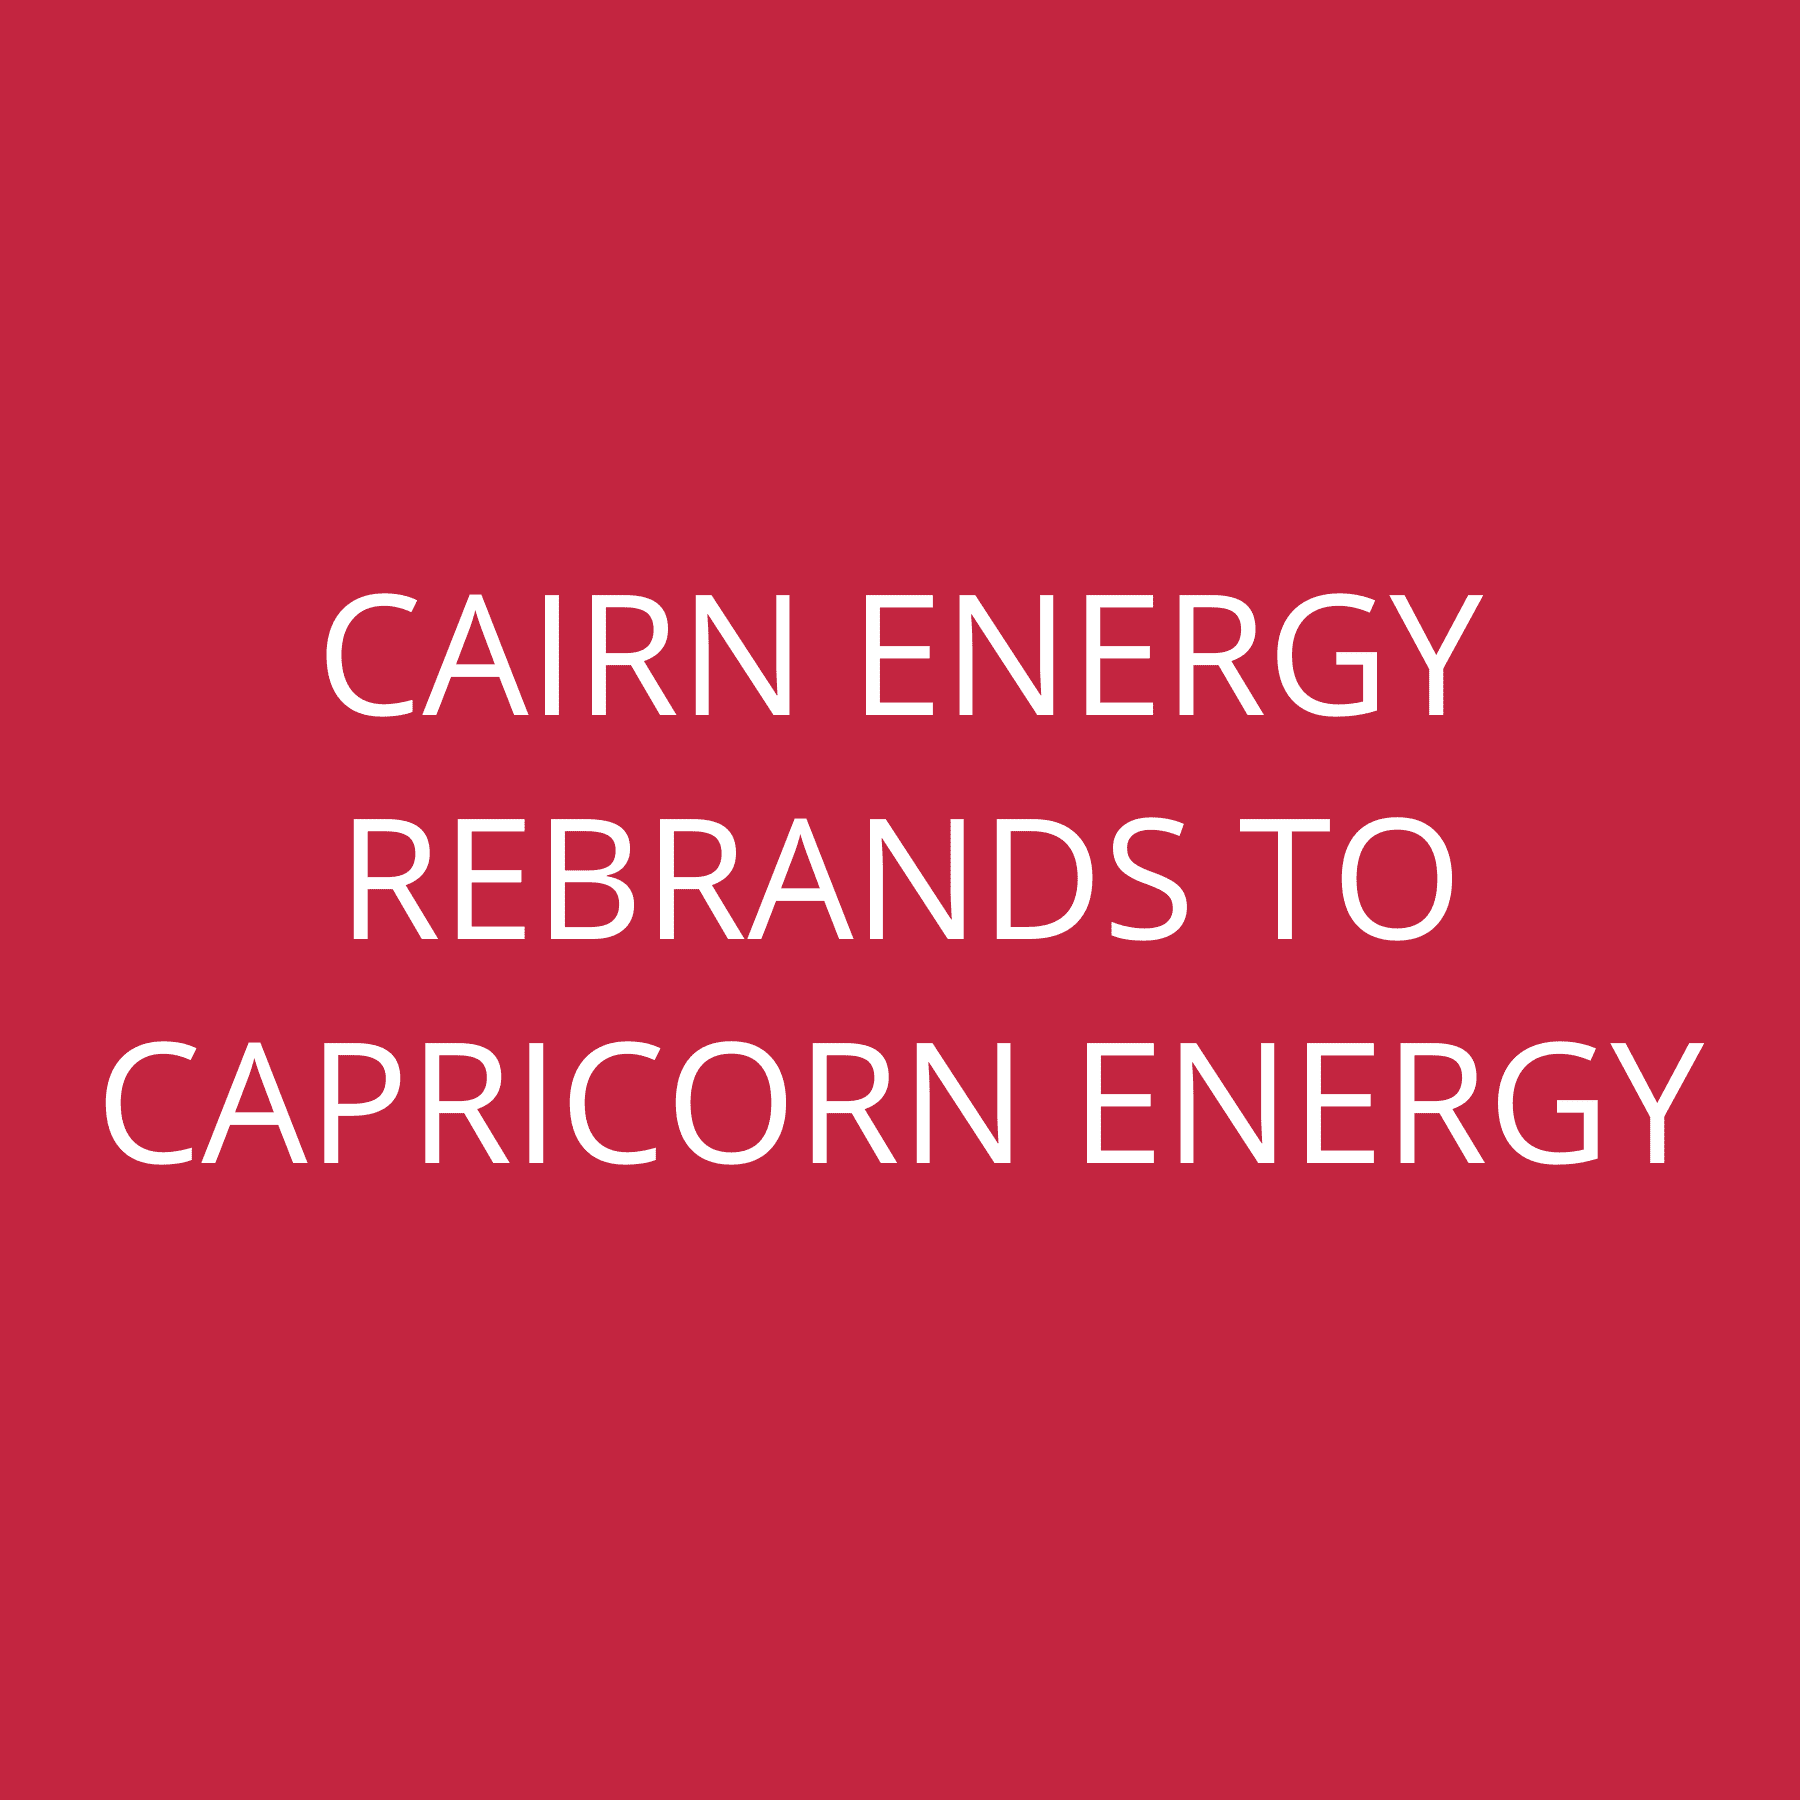 Cairn Energy rebrands to Capricorn Energy